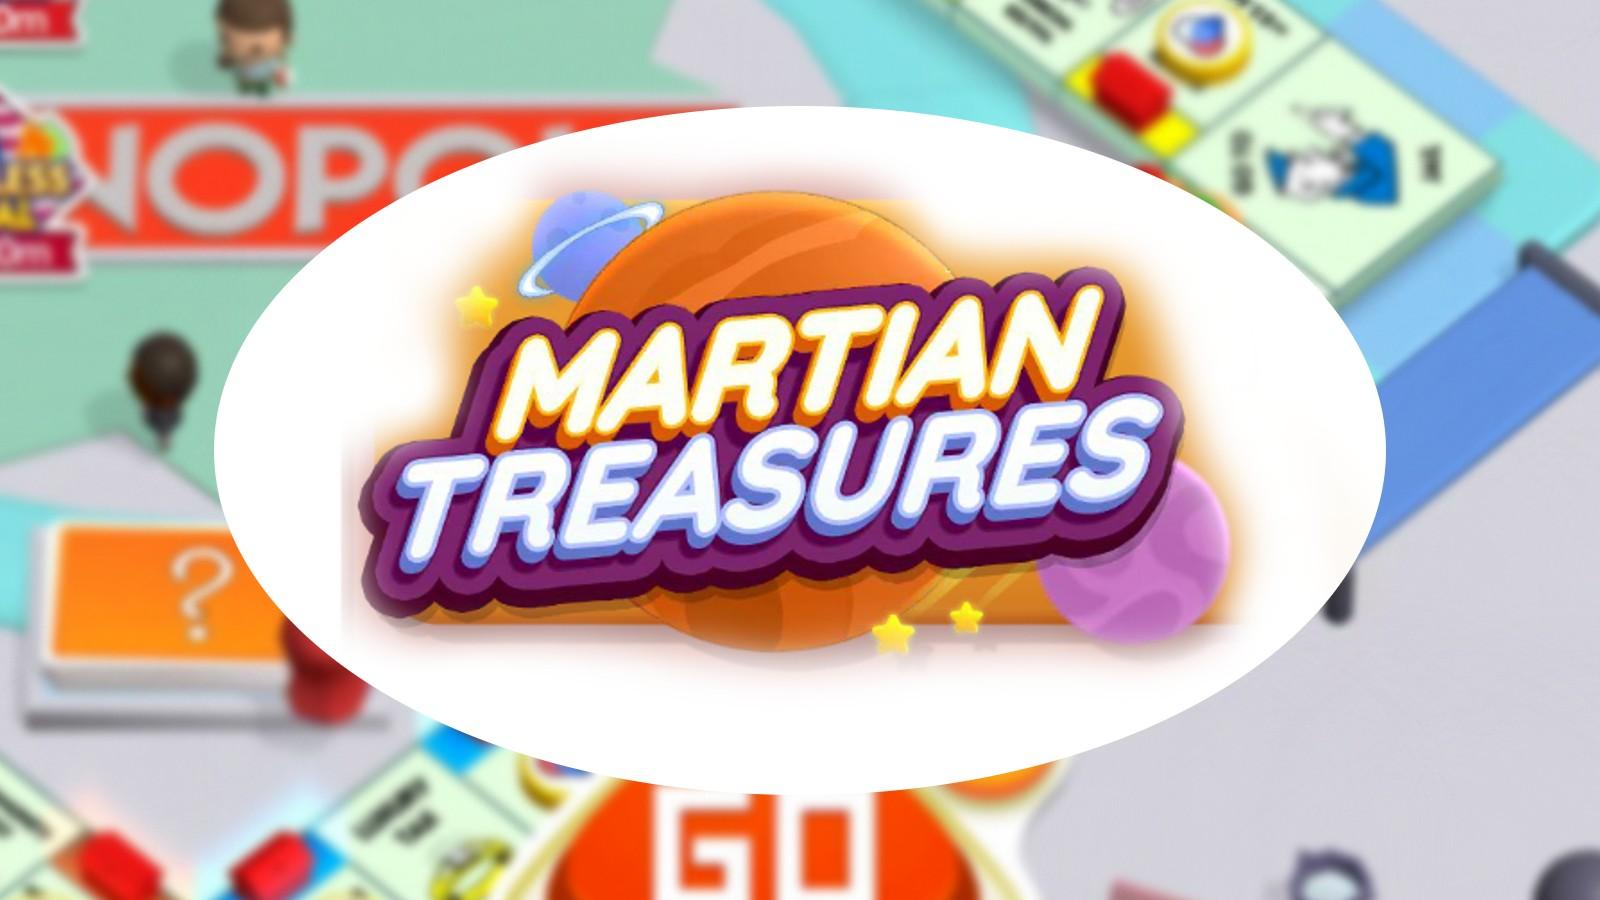 Martian Treasures Event Monopoly GO